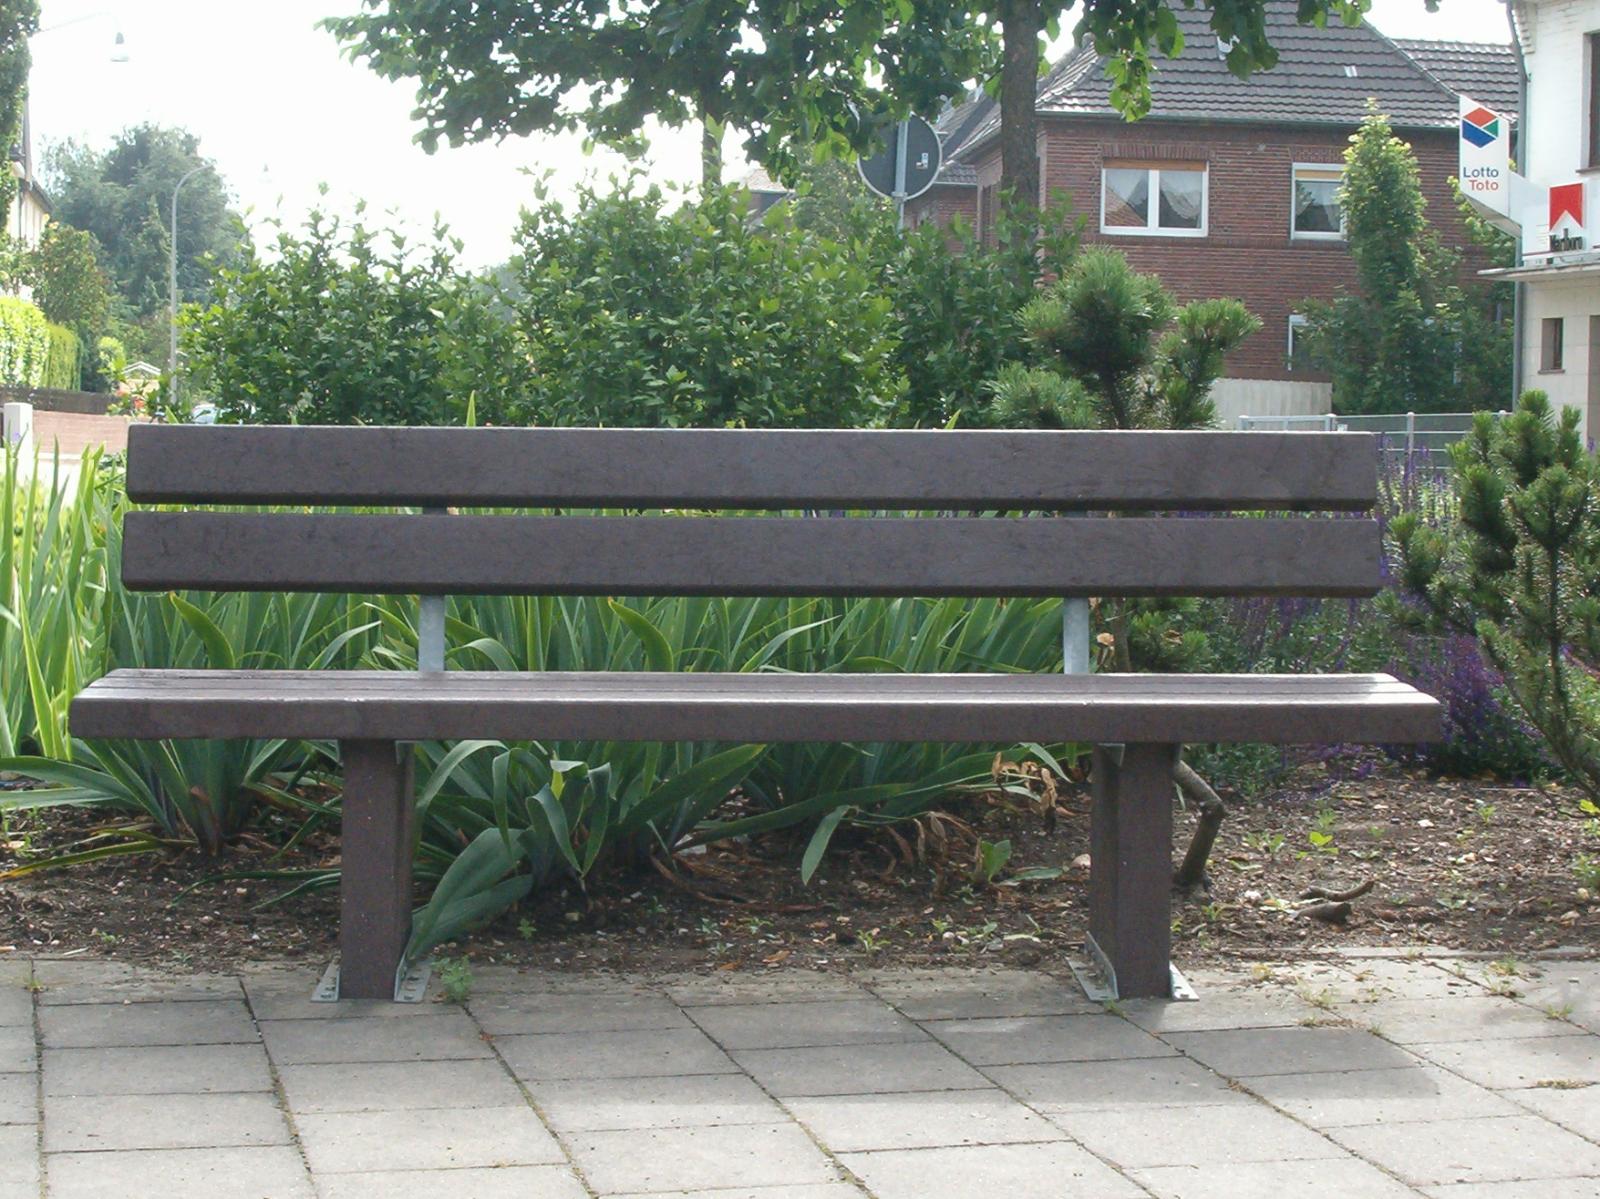 Eifel bench